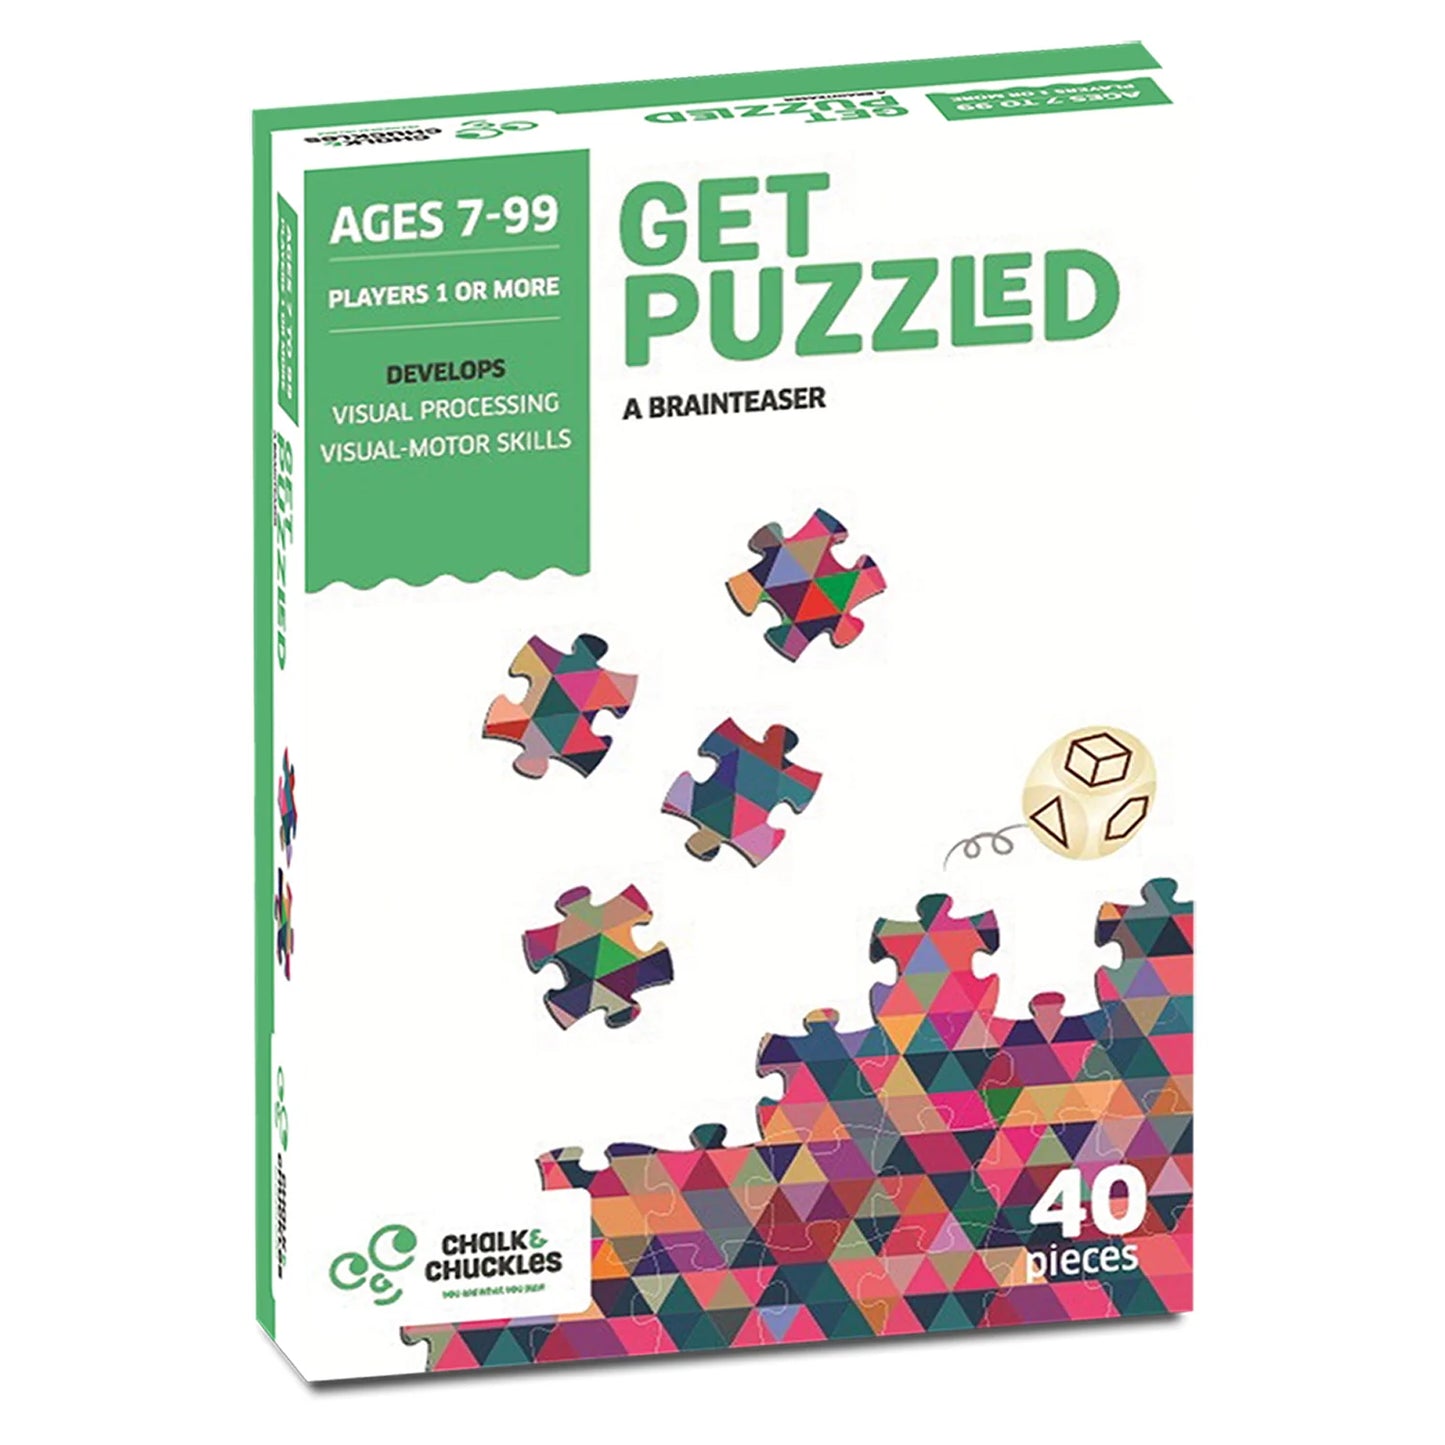 Get Puzzled- A Brainteaser